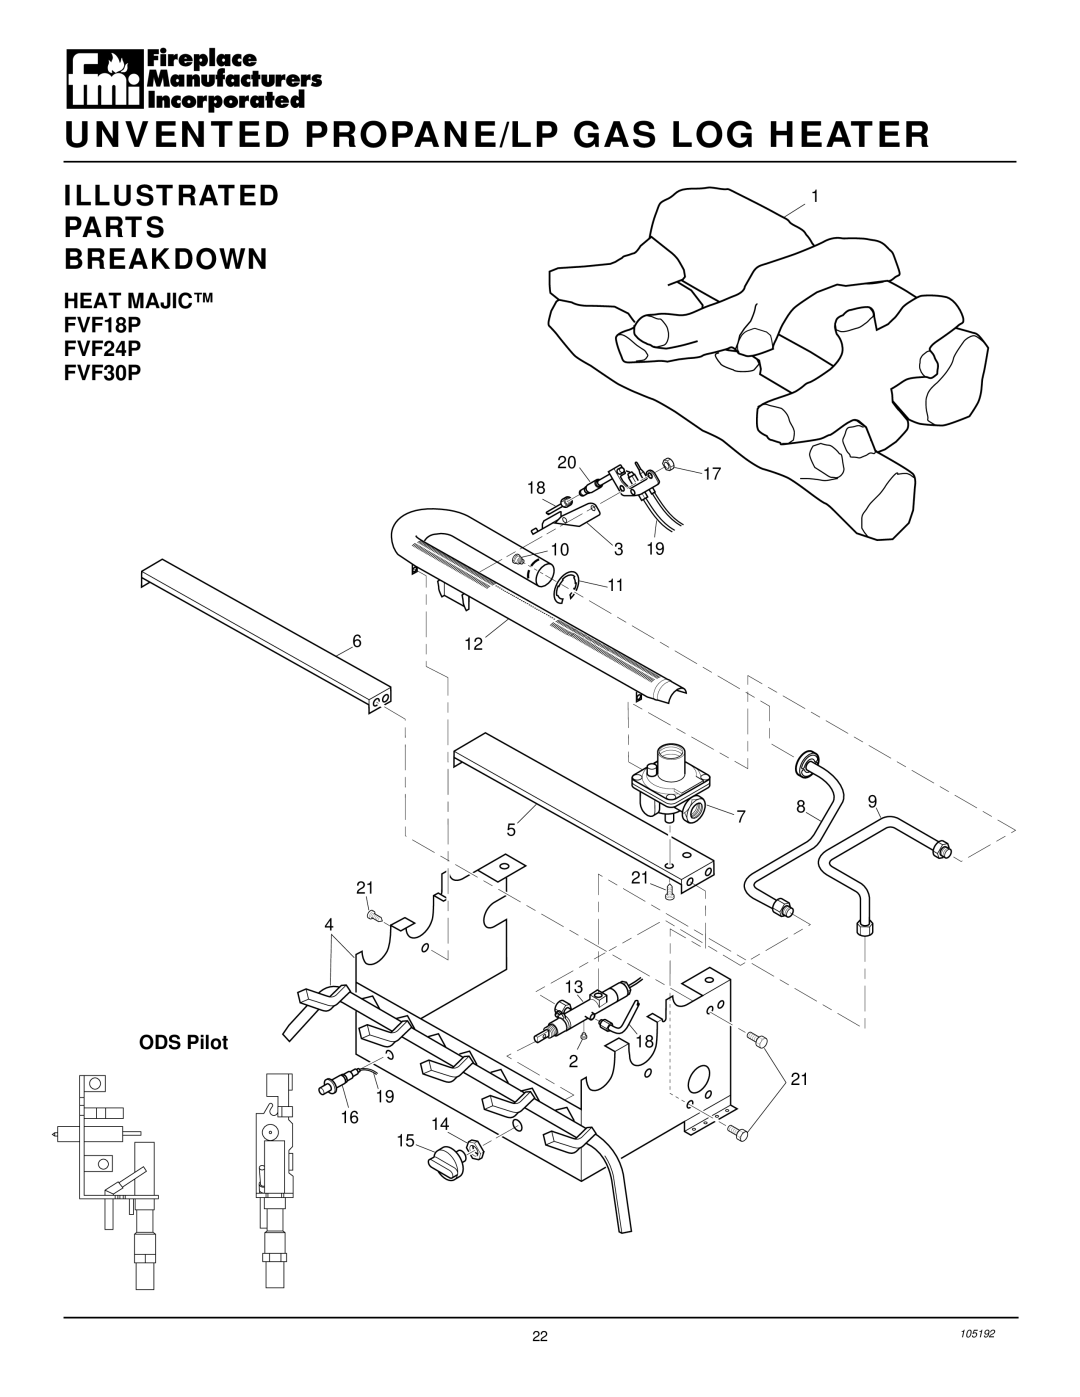 FMI installation manual Illustrated Parts Breakdown, Heat Majic FVF18P FVF24P FVF30P, ODS Pilot 